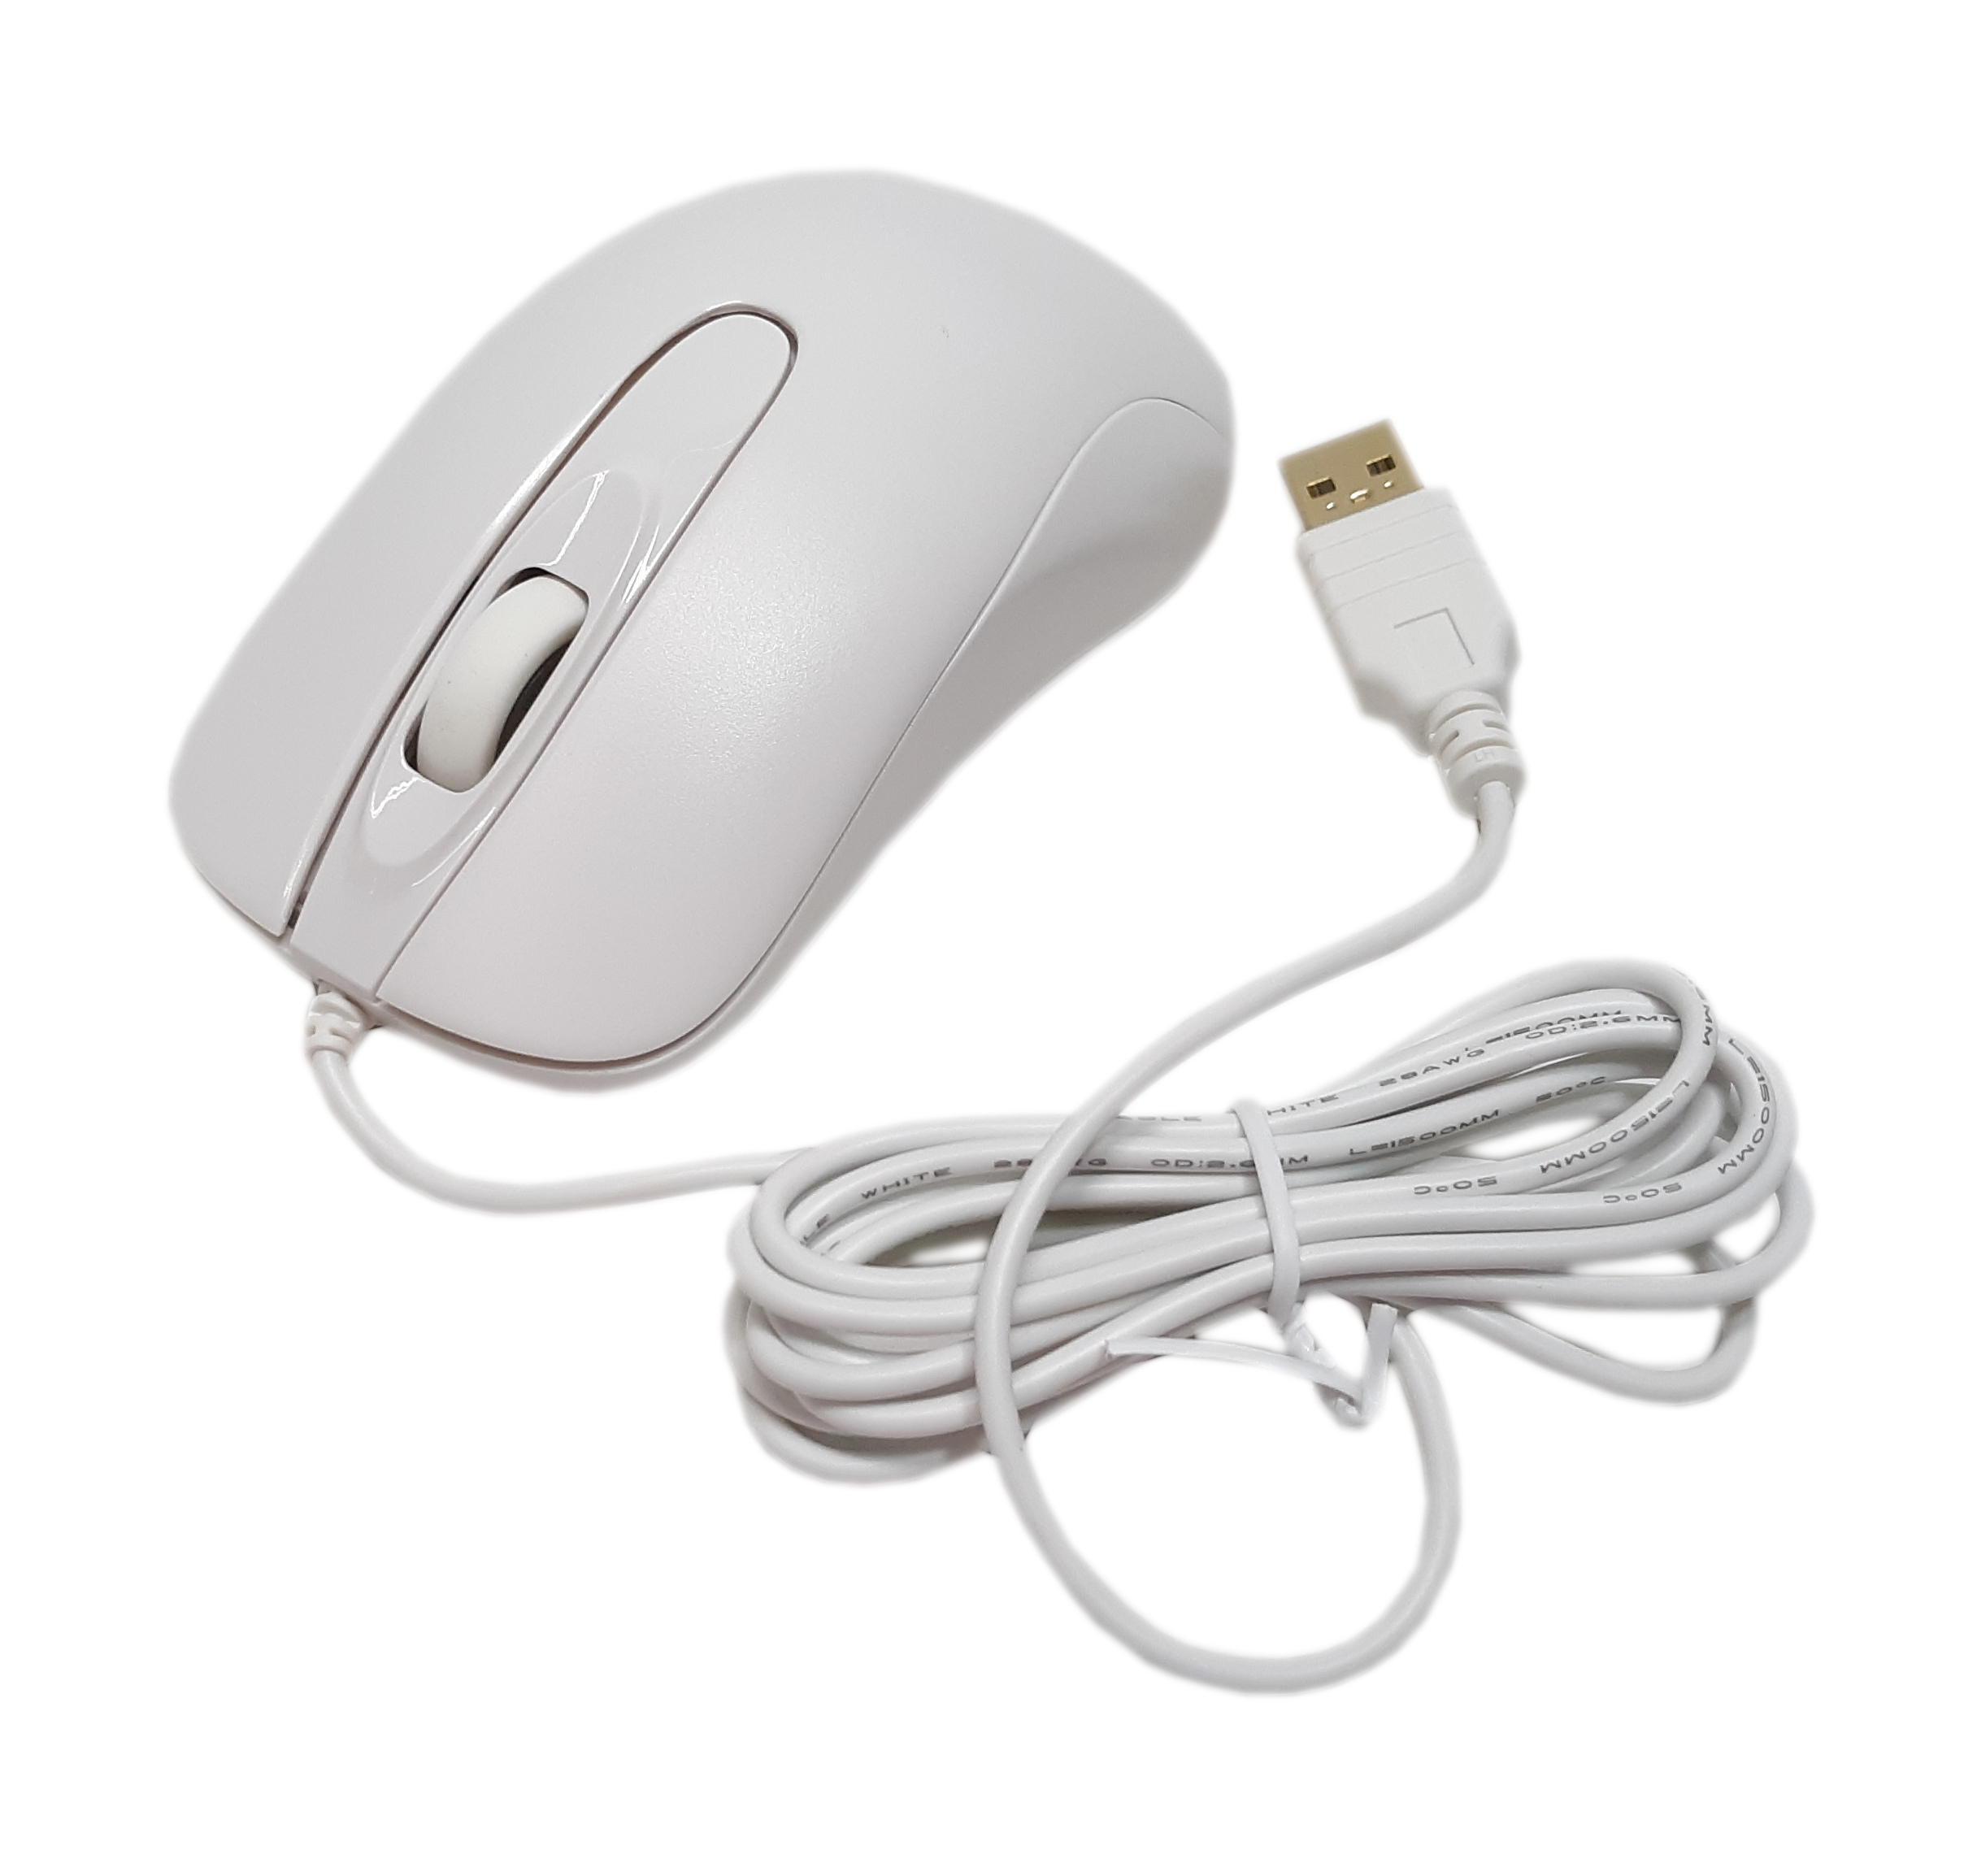 HP USB Mouse Man & Machine Medical Lab Healthcare Edition White 5.0V 100mA 926943-001 927233-001